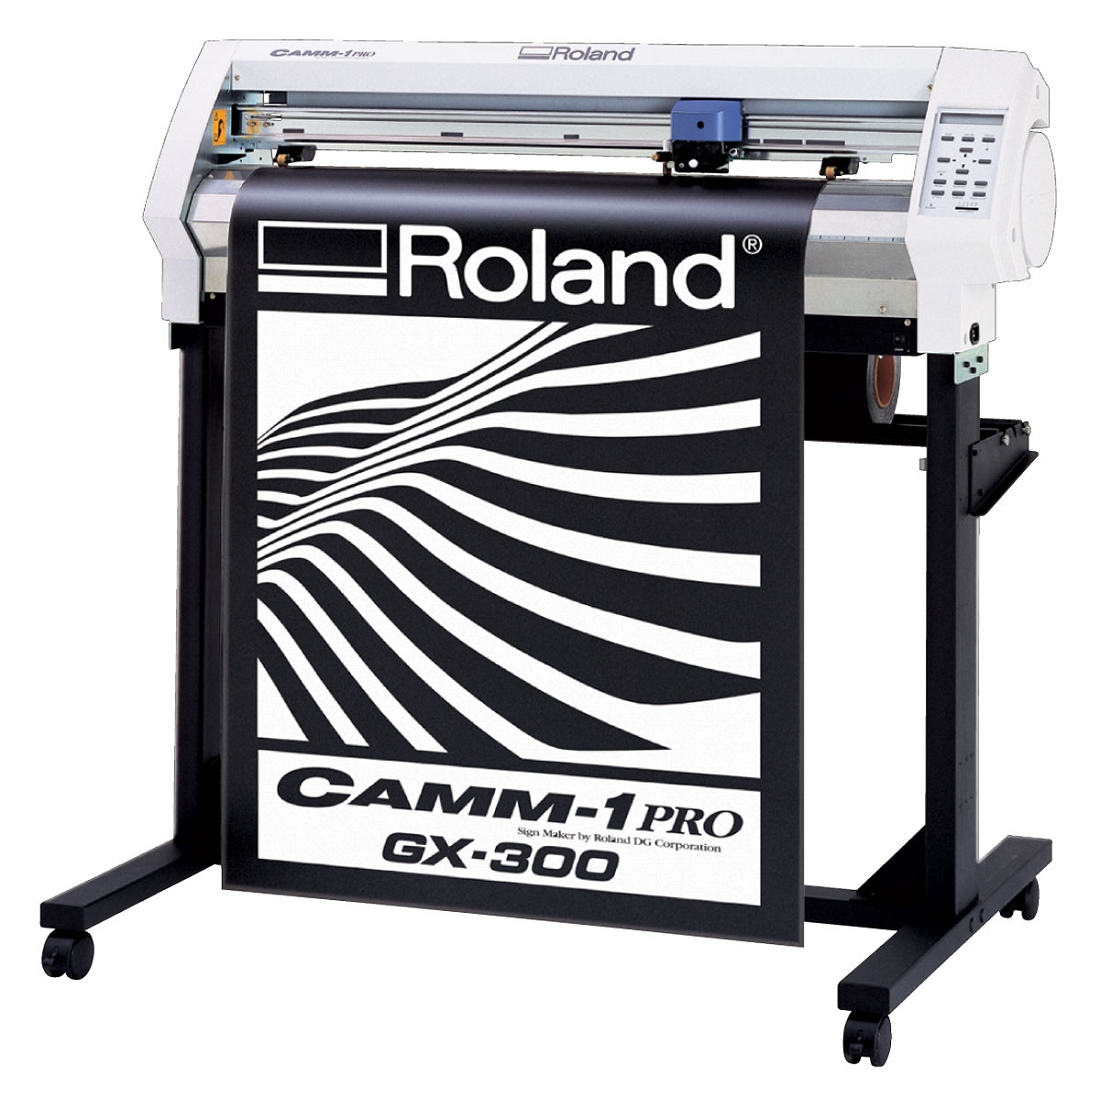 Roland camm-1 pro gx-500 drivers for mac